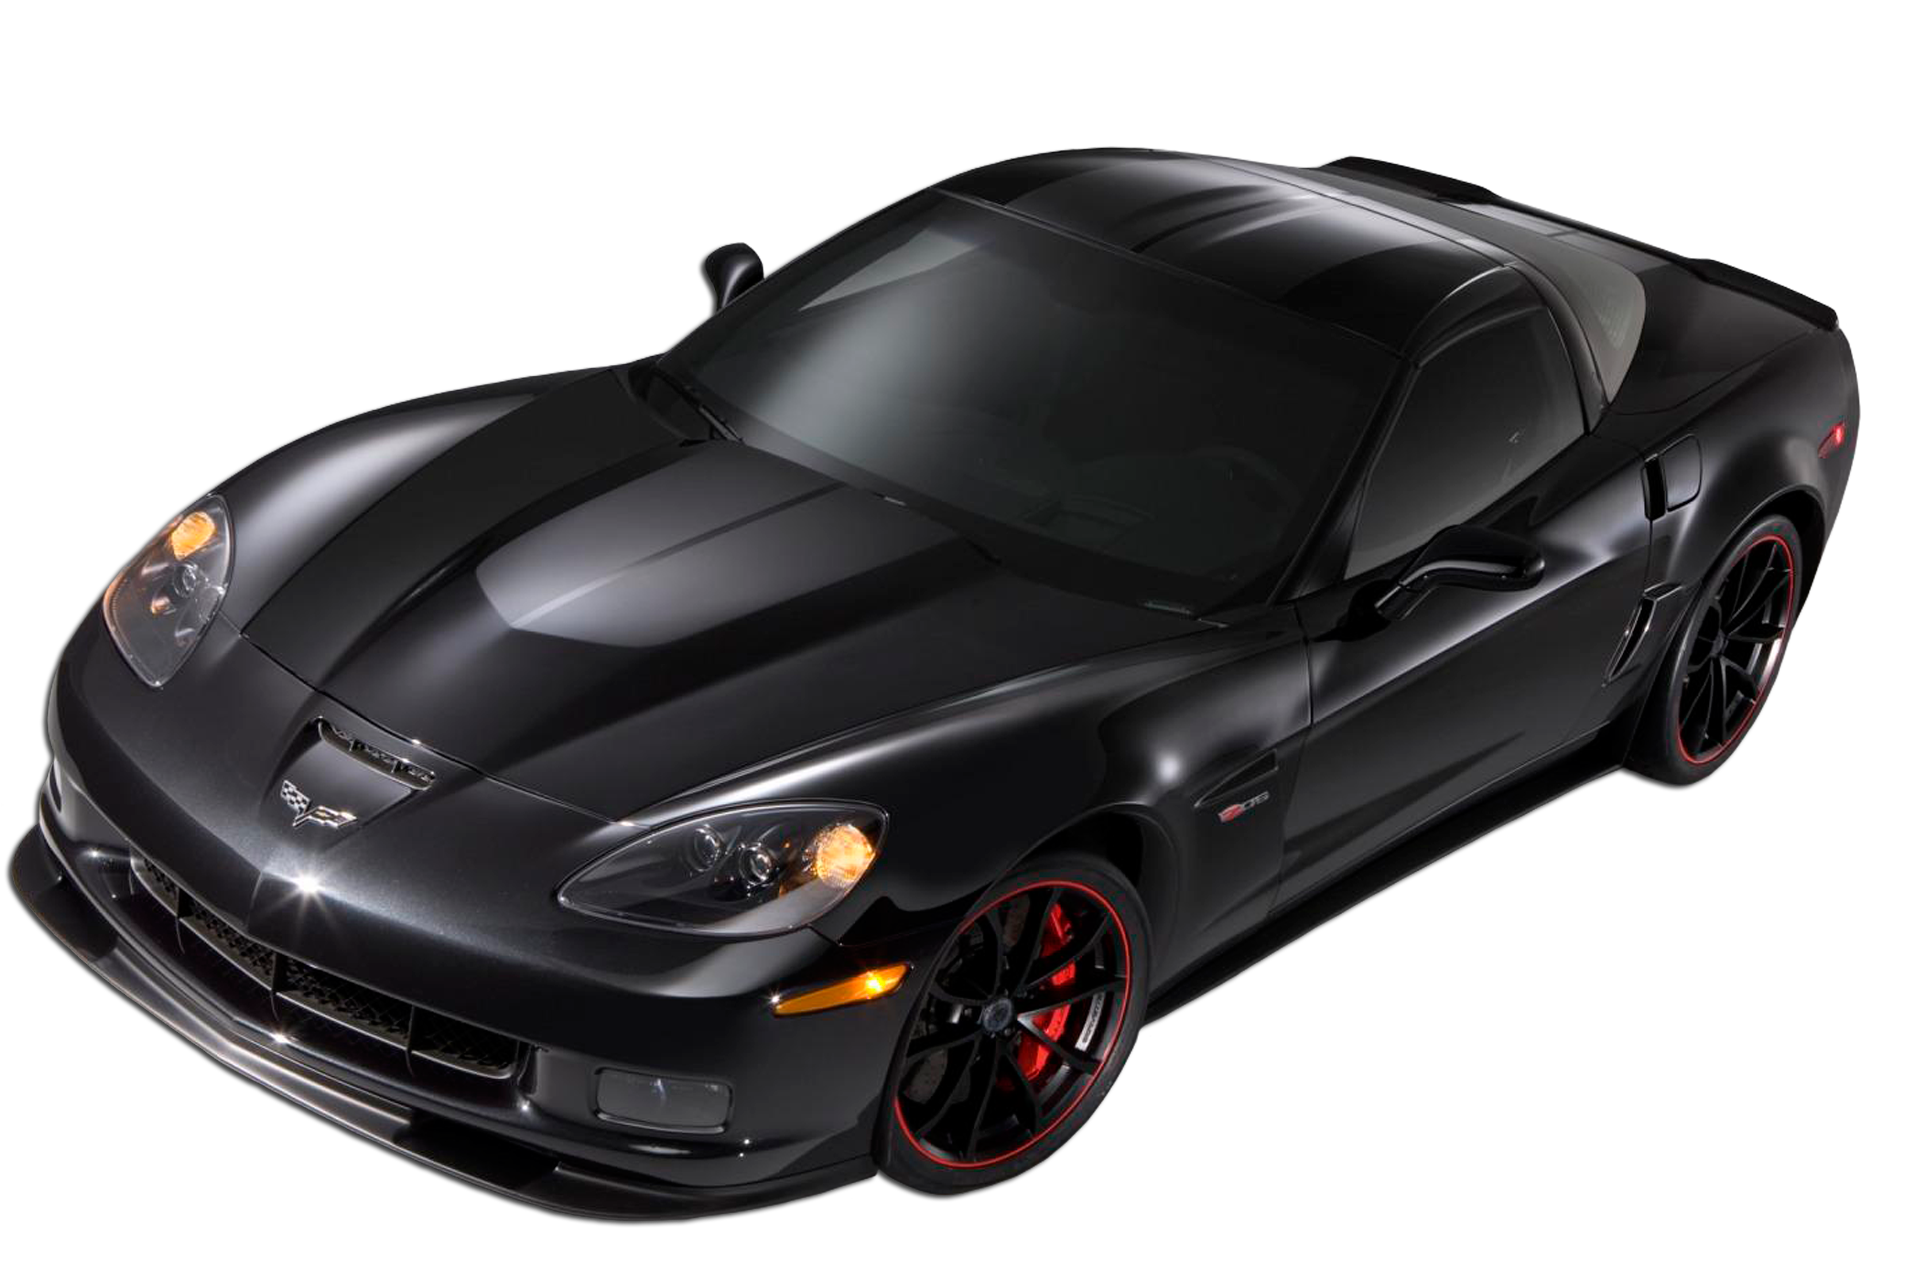 Chevrolet Corvette c6 PNG. Черная машина. Автомобиль без фона. Автомобиль на белом фоне. Машинки на белом фоне